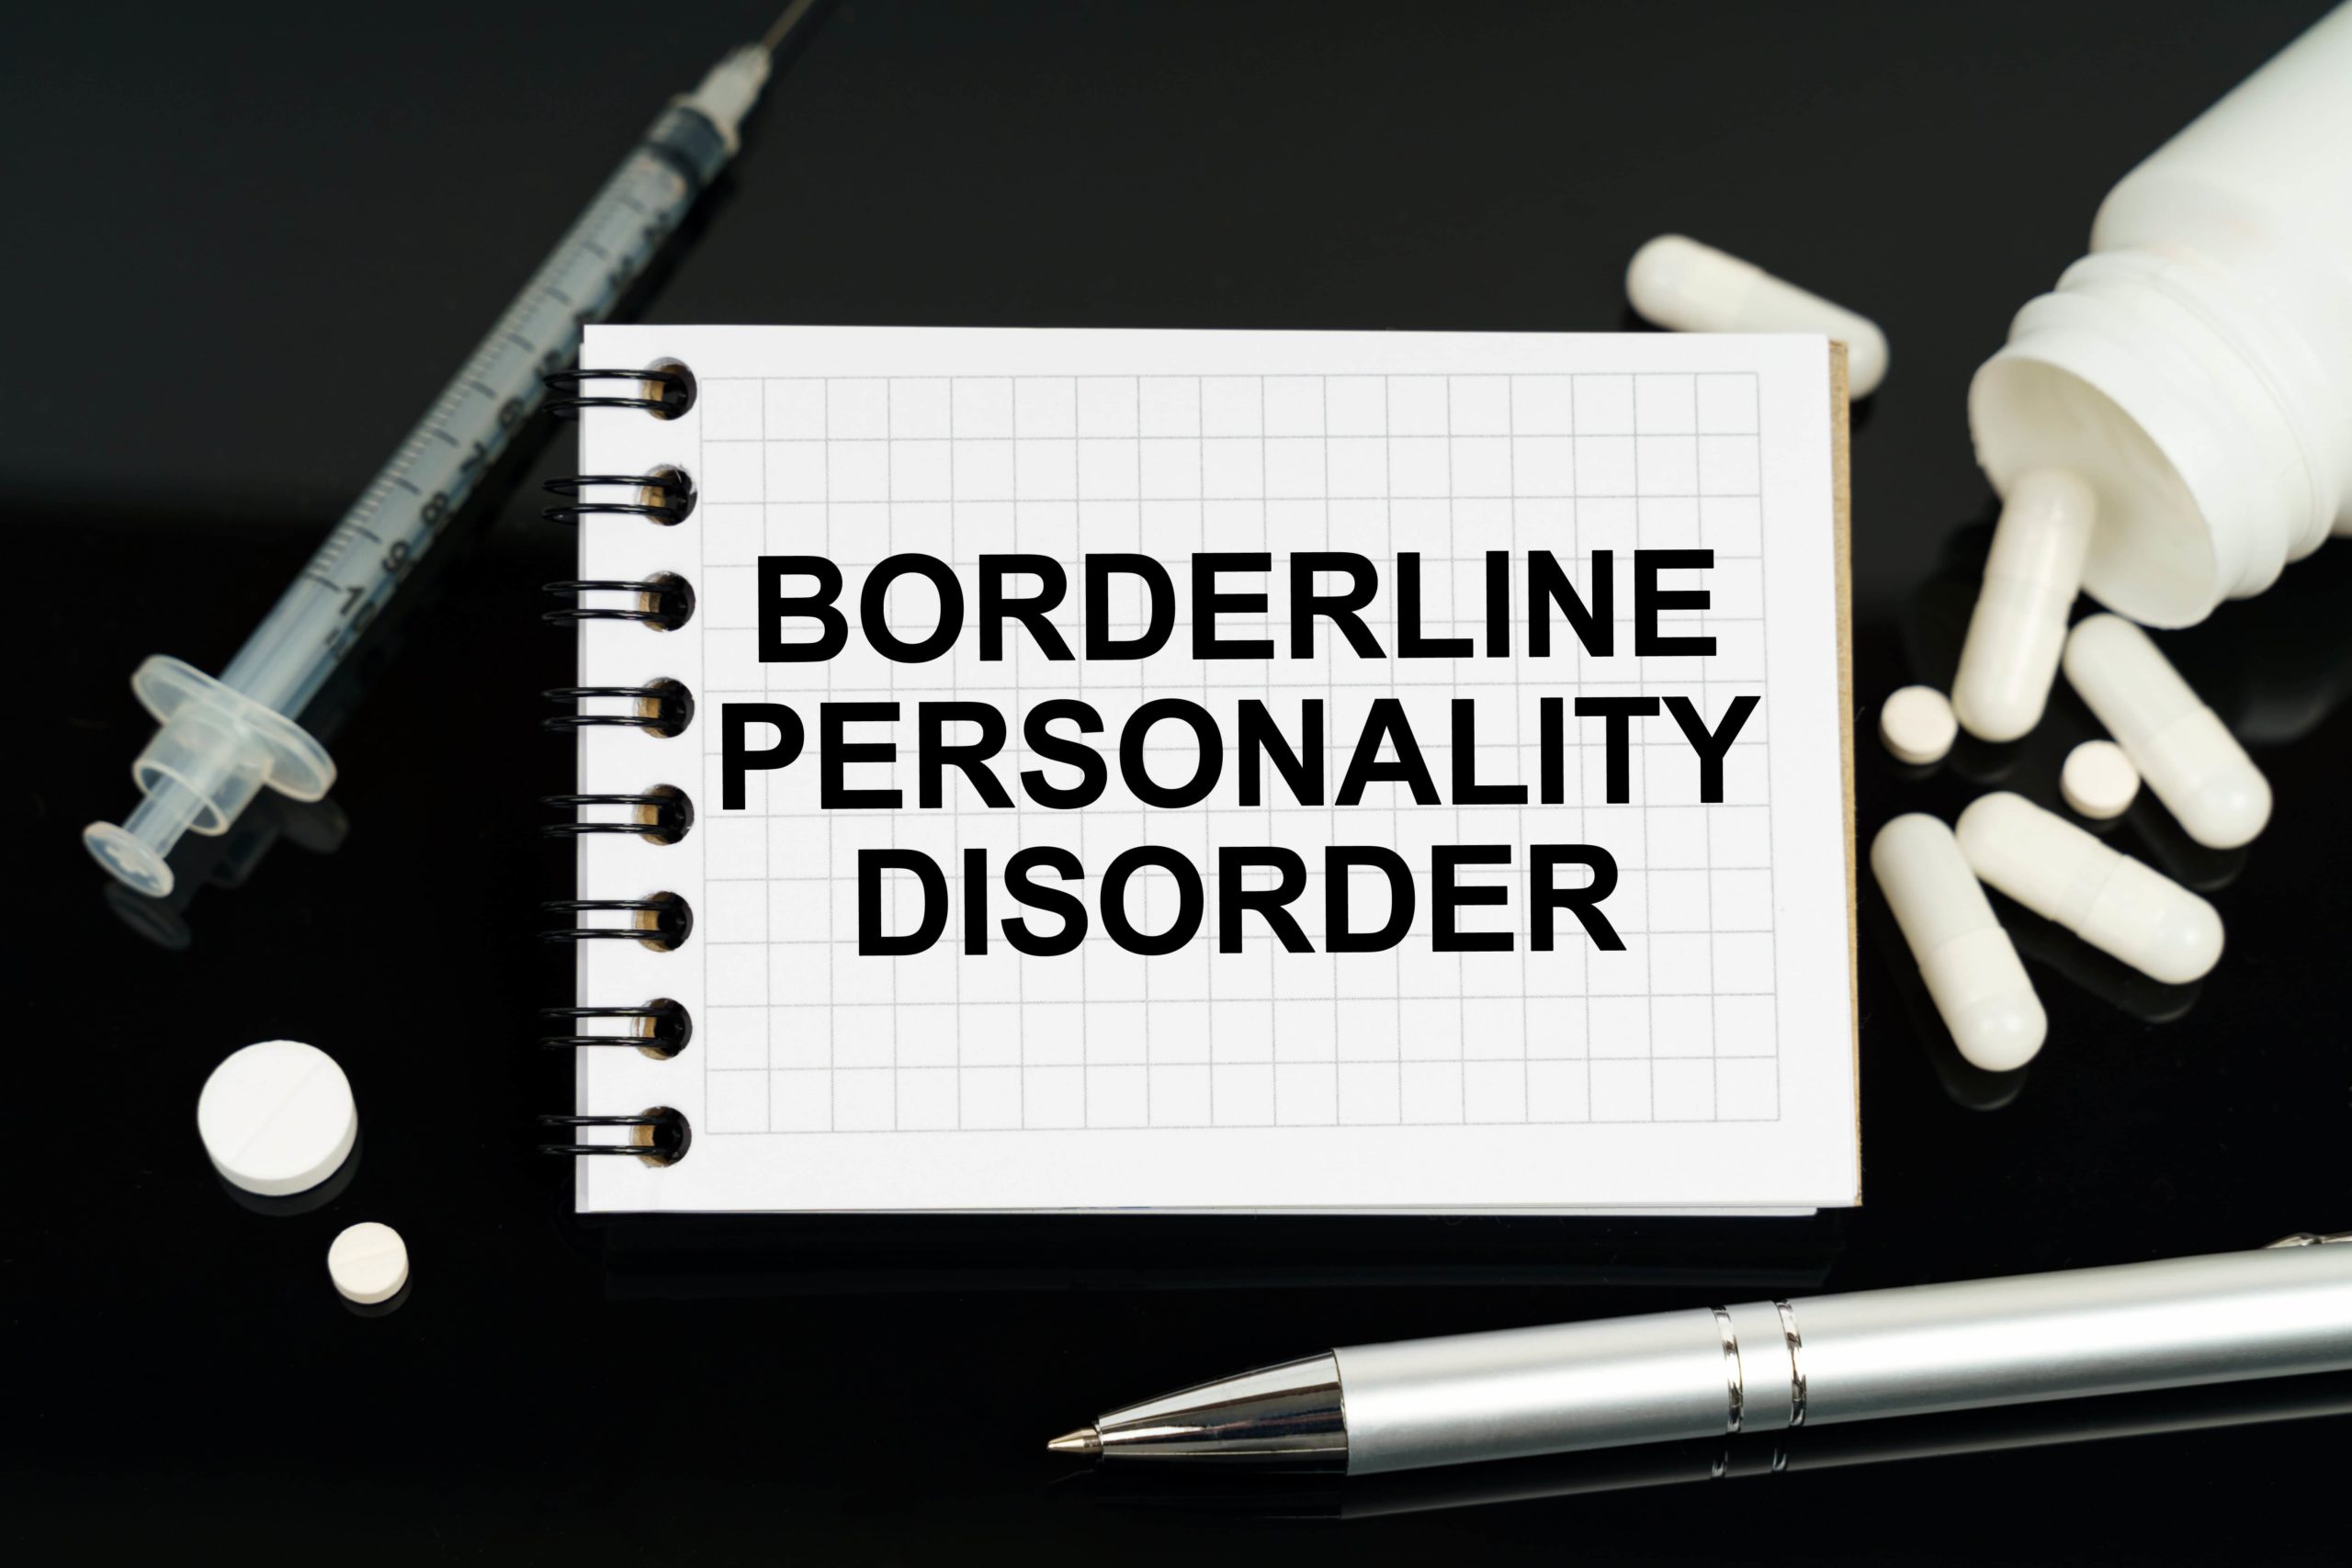 borderline personality disorder written next to drugs